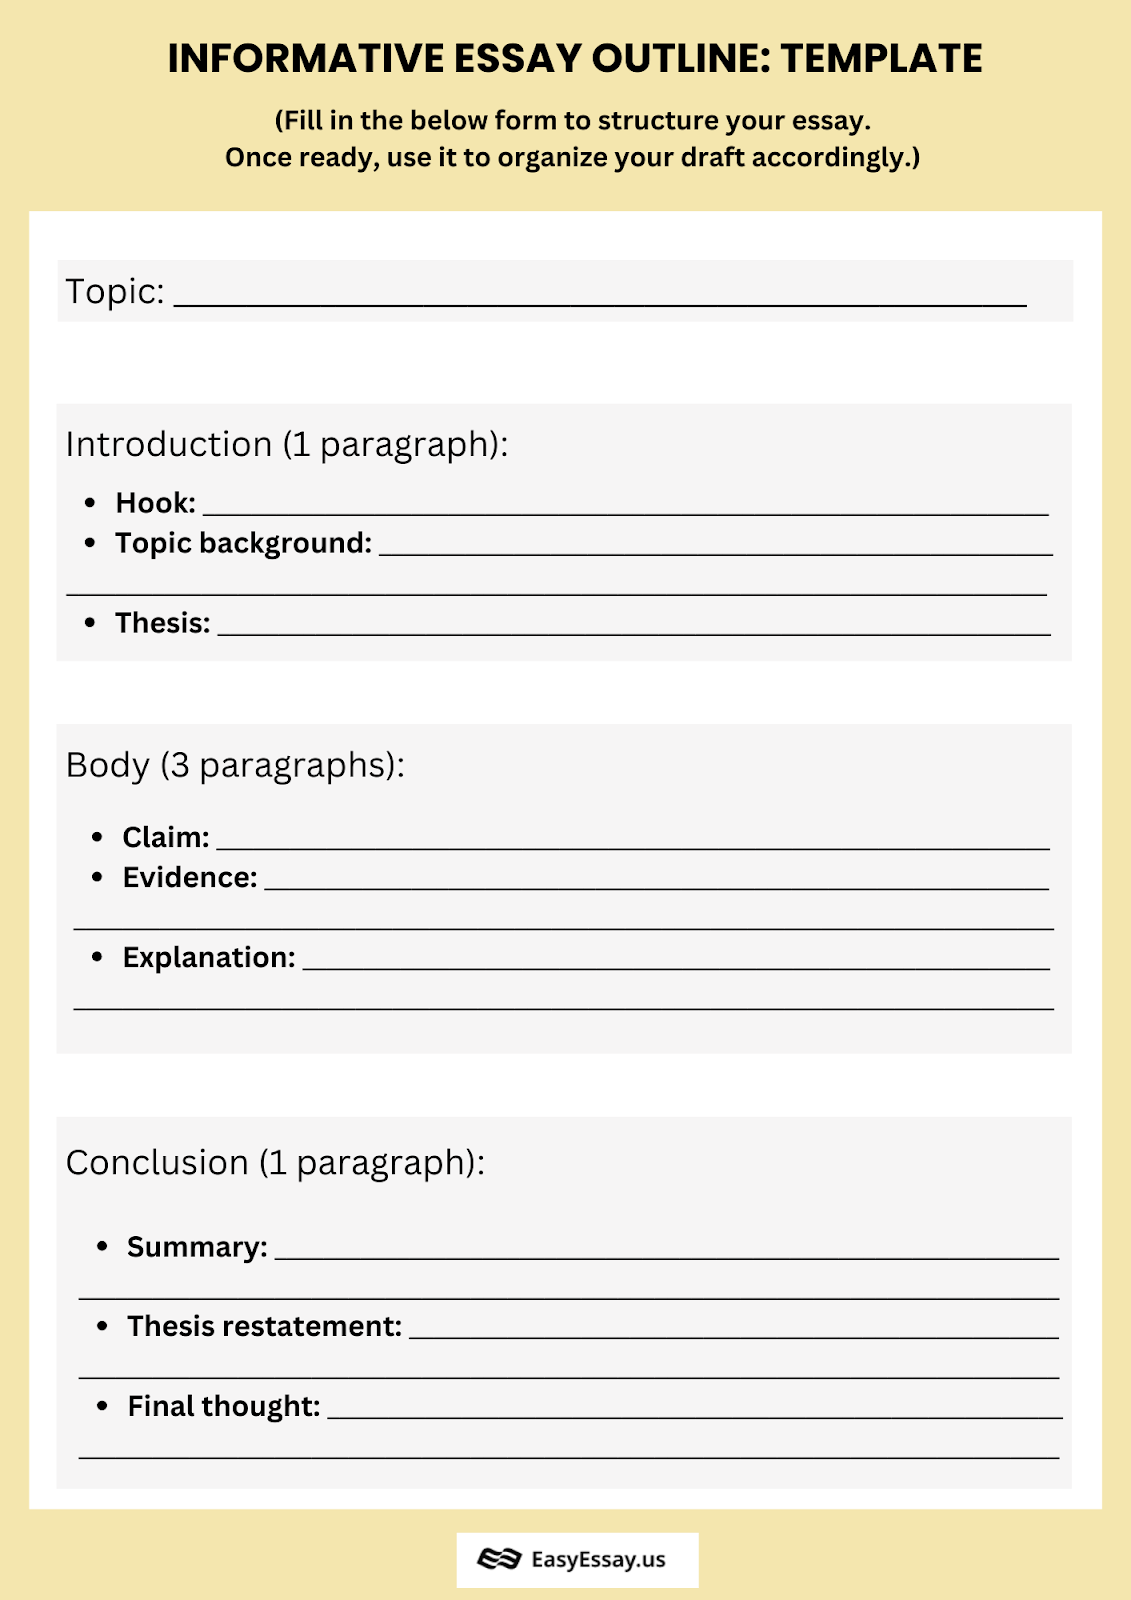 informative-essay-outline-template